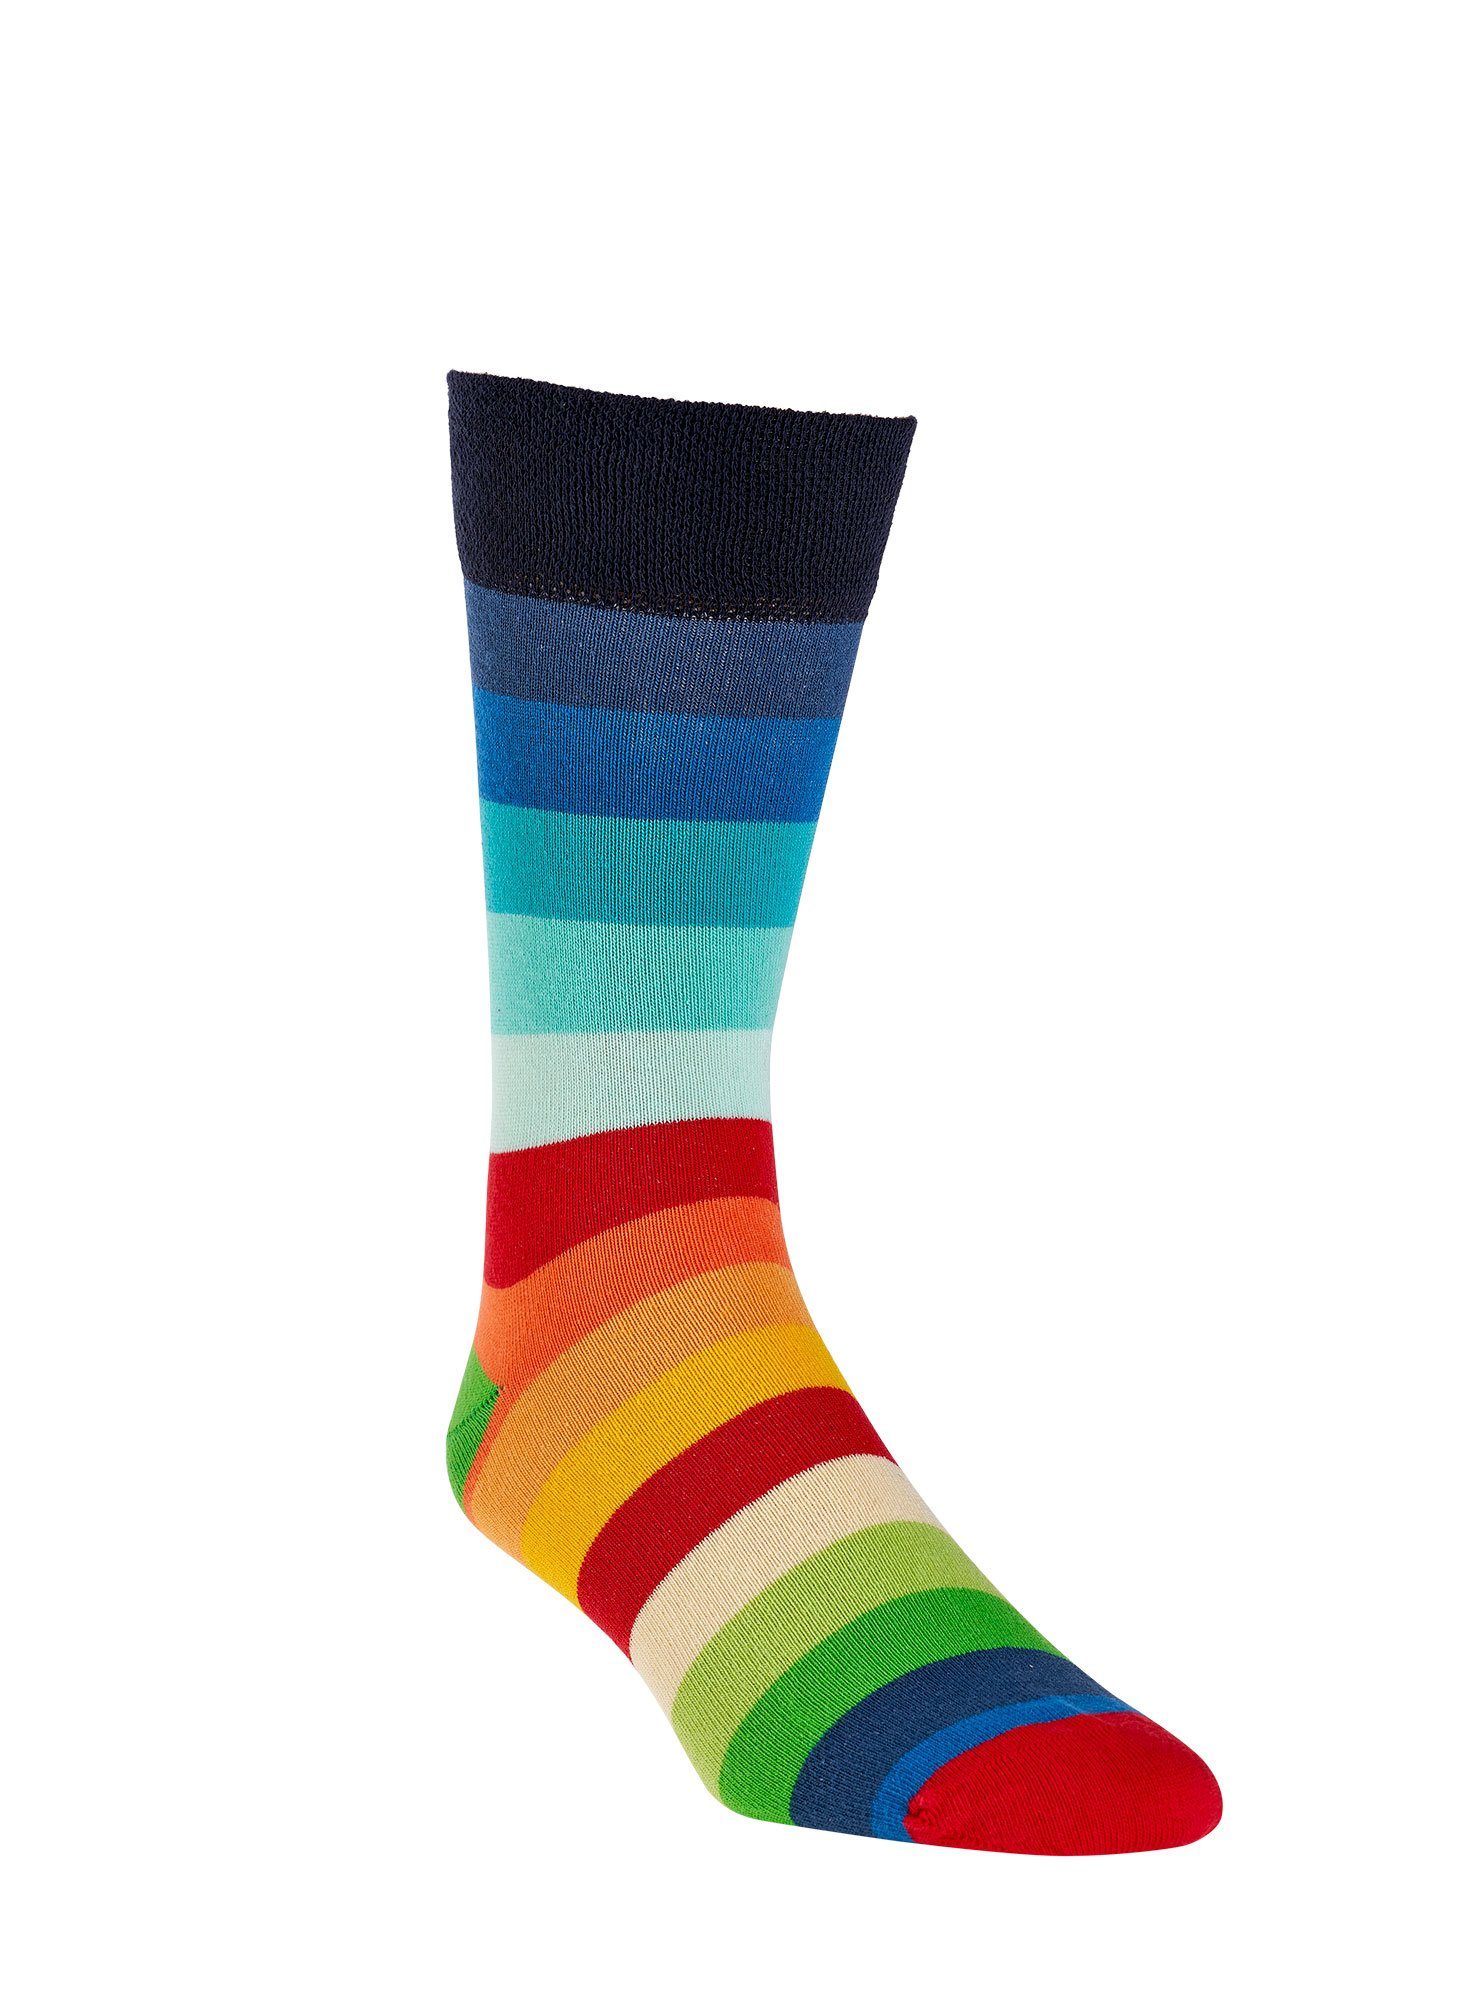 Socks 4 Fun LGBTQ Socken Toleranz Unisex Regenbogen (2 Baumwolle Socken Paar) Rainbow